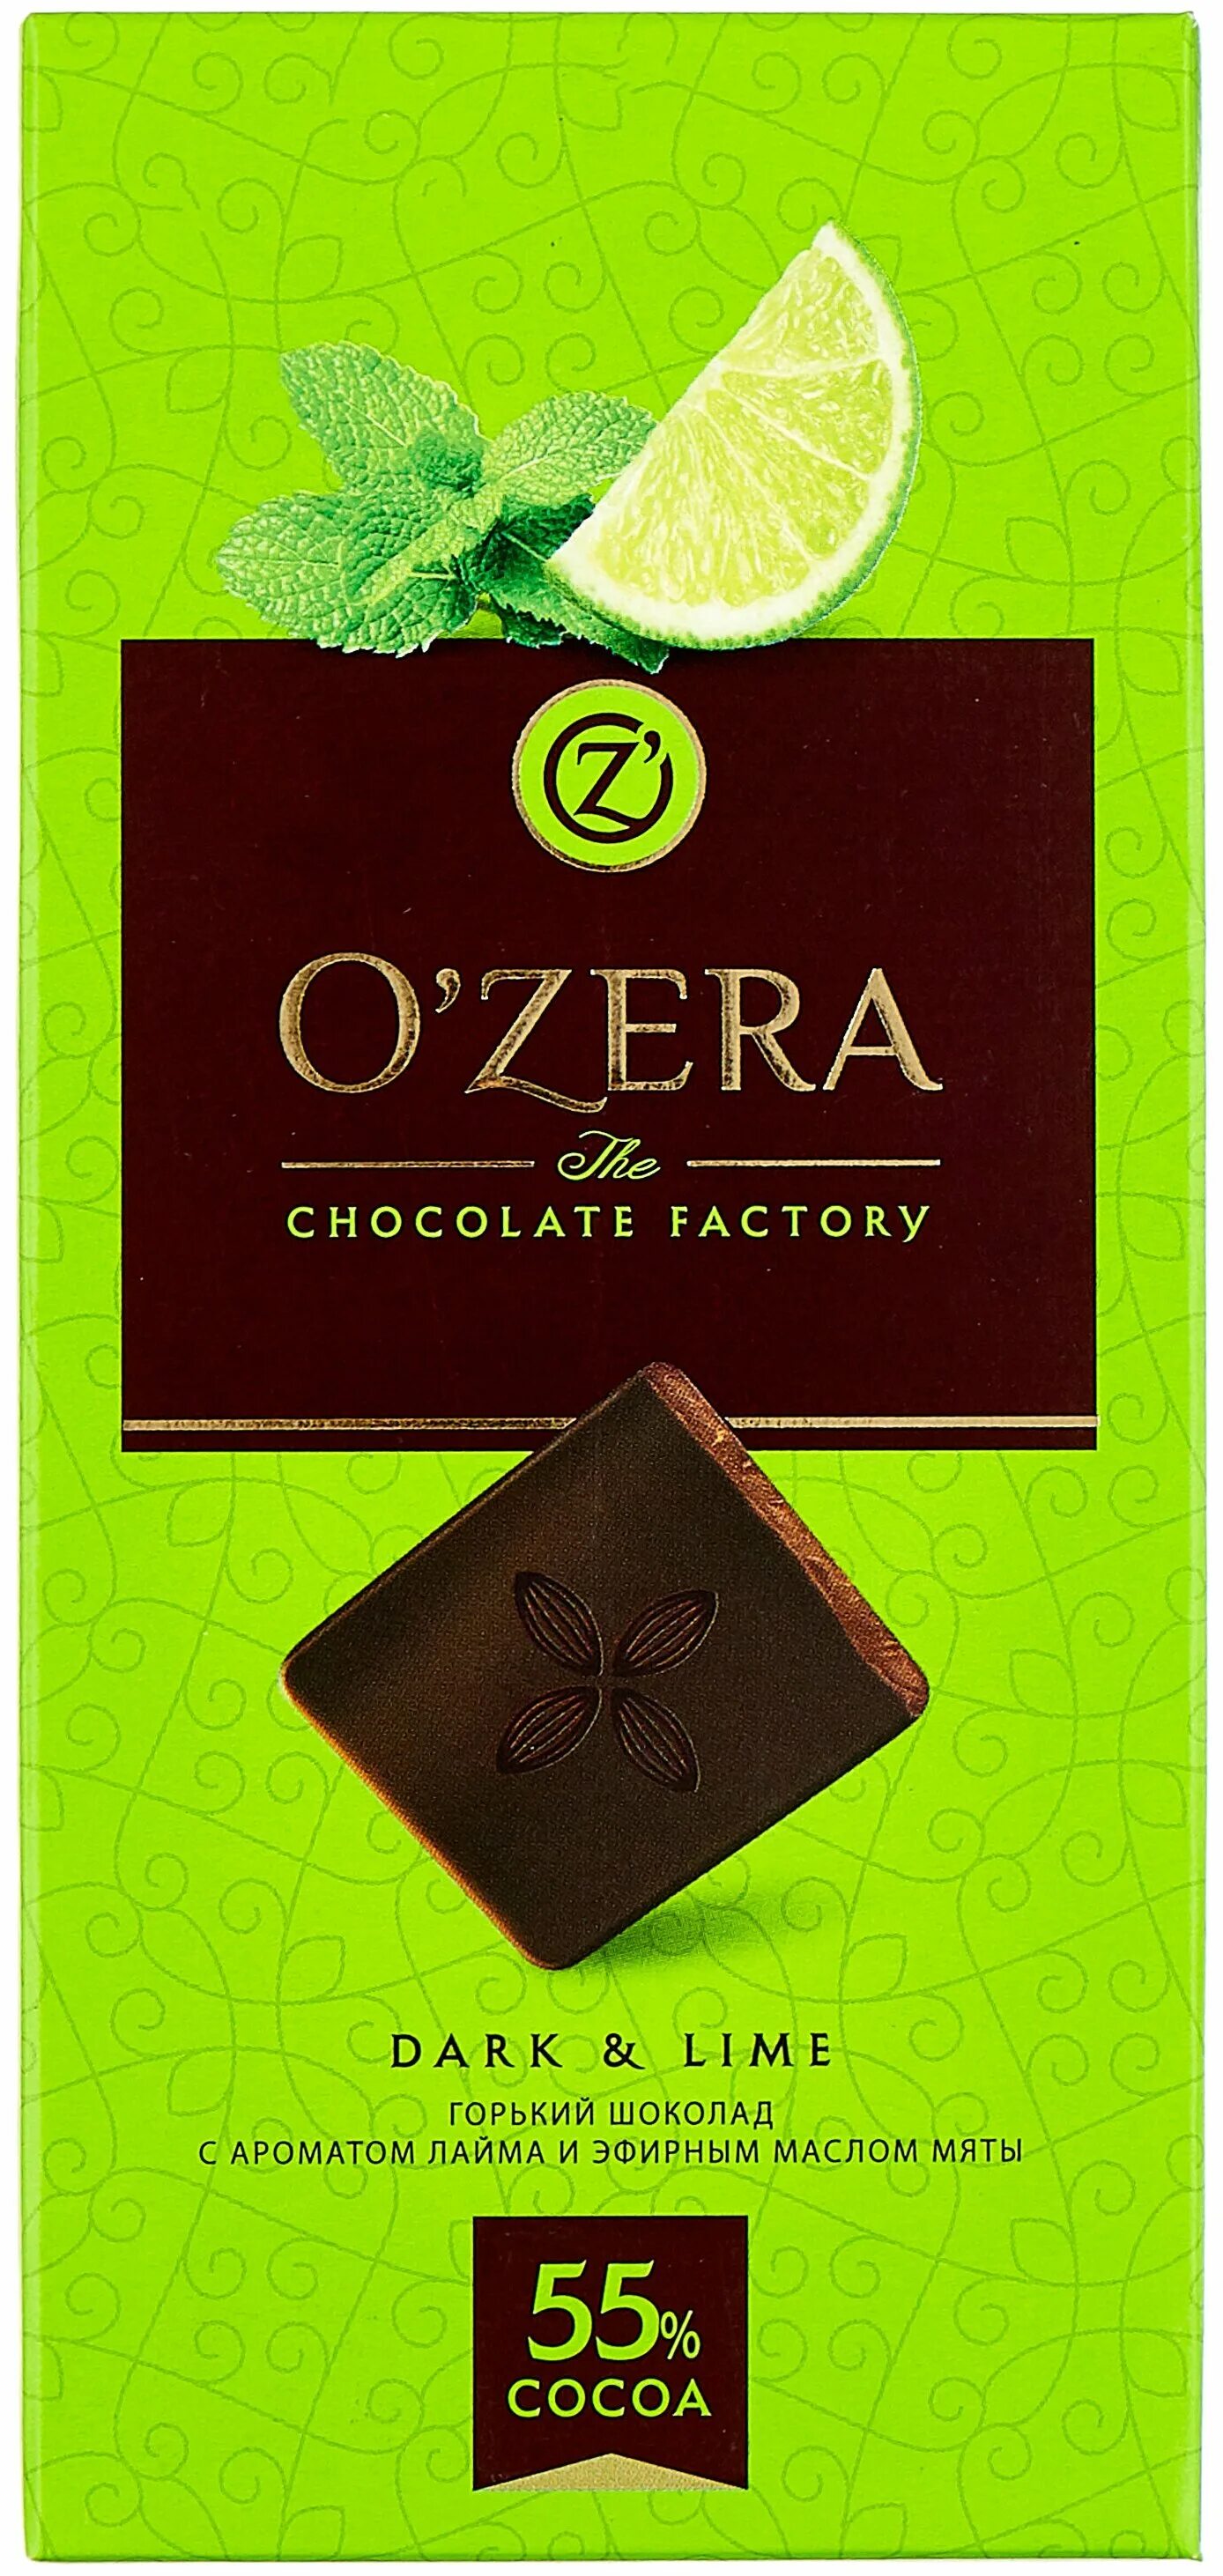 Zera шоколад. Горький шоколад Ozera. Ozera, шоколад Горький Dark. Ozera шоколад 55 какао. Шоколад o'Zera производитель.